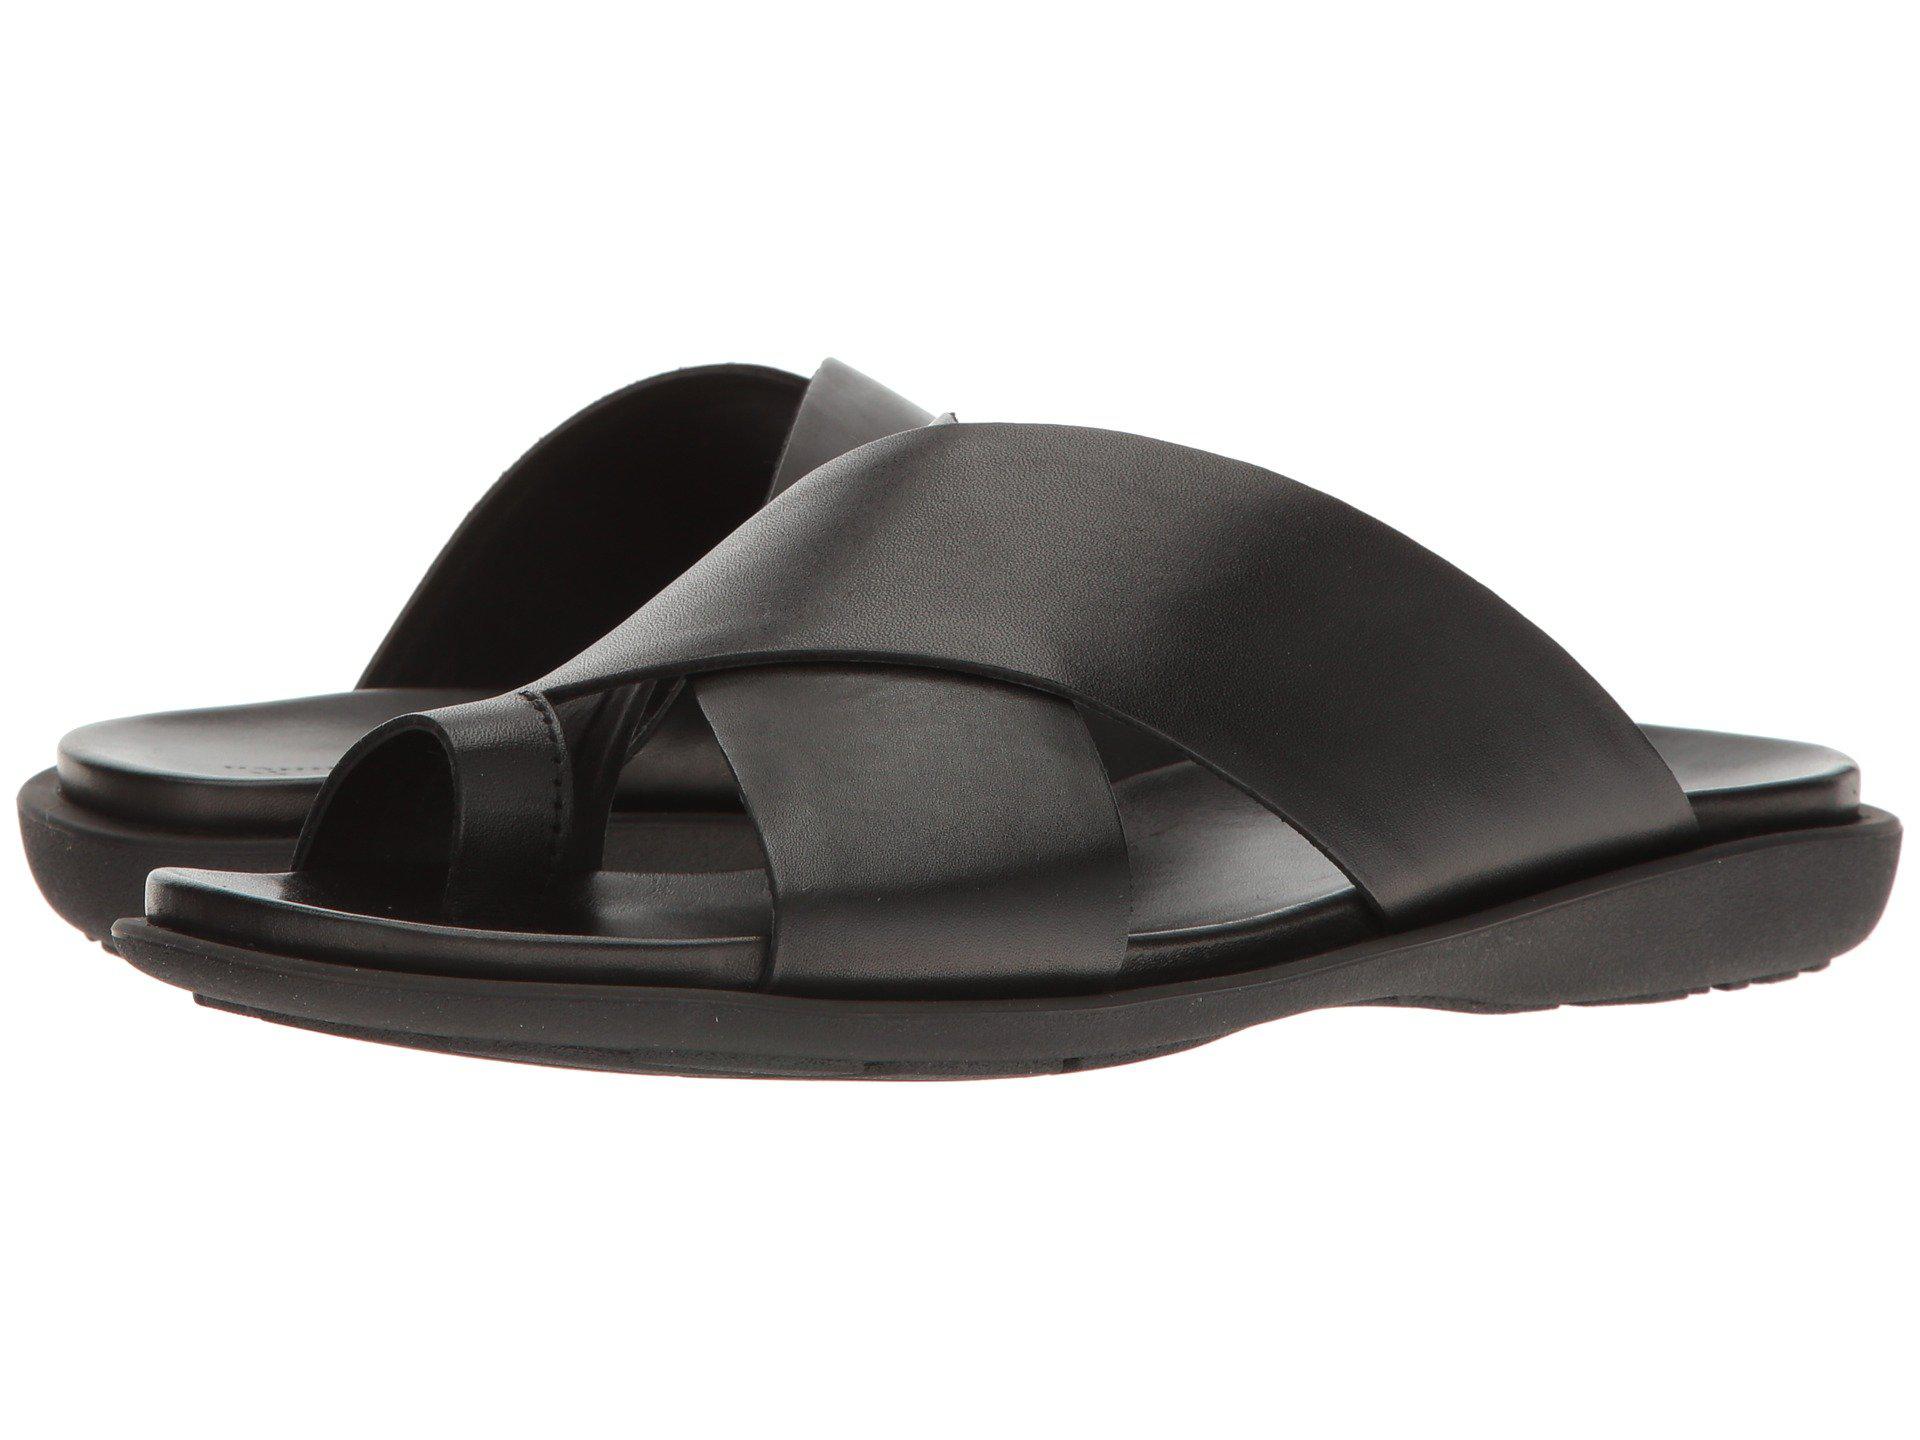 Kenneth Cole Leather Under-sand-able (black) Men's Sandals for Men - Lyst